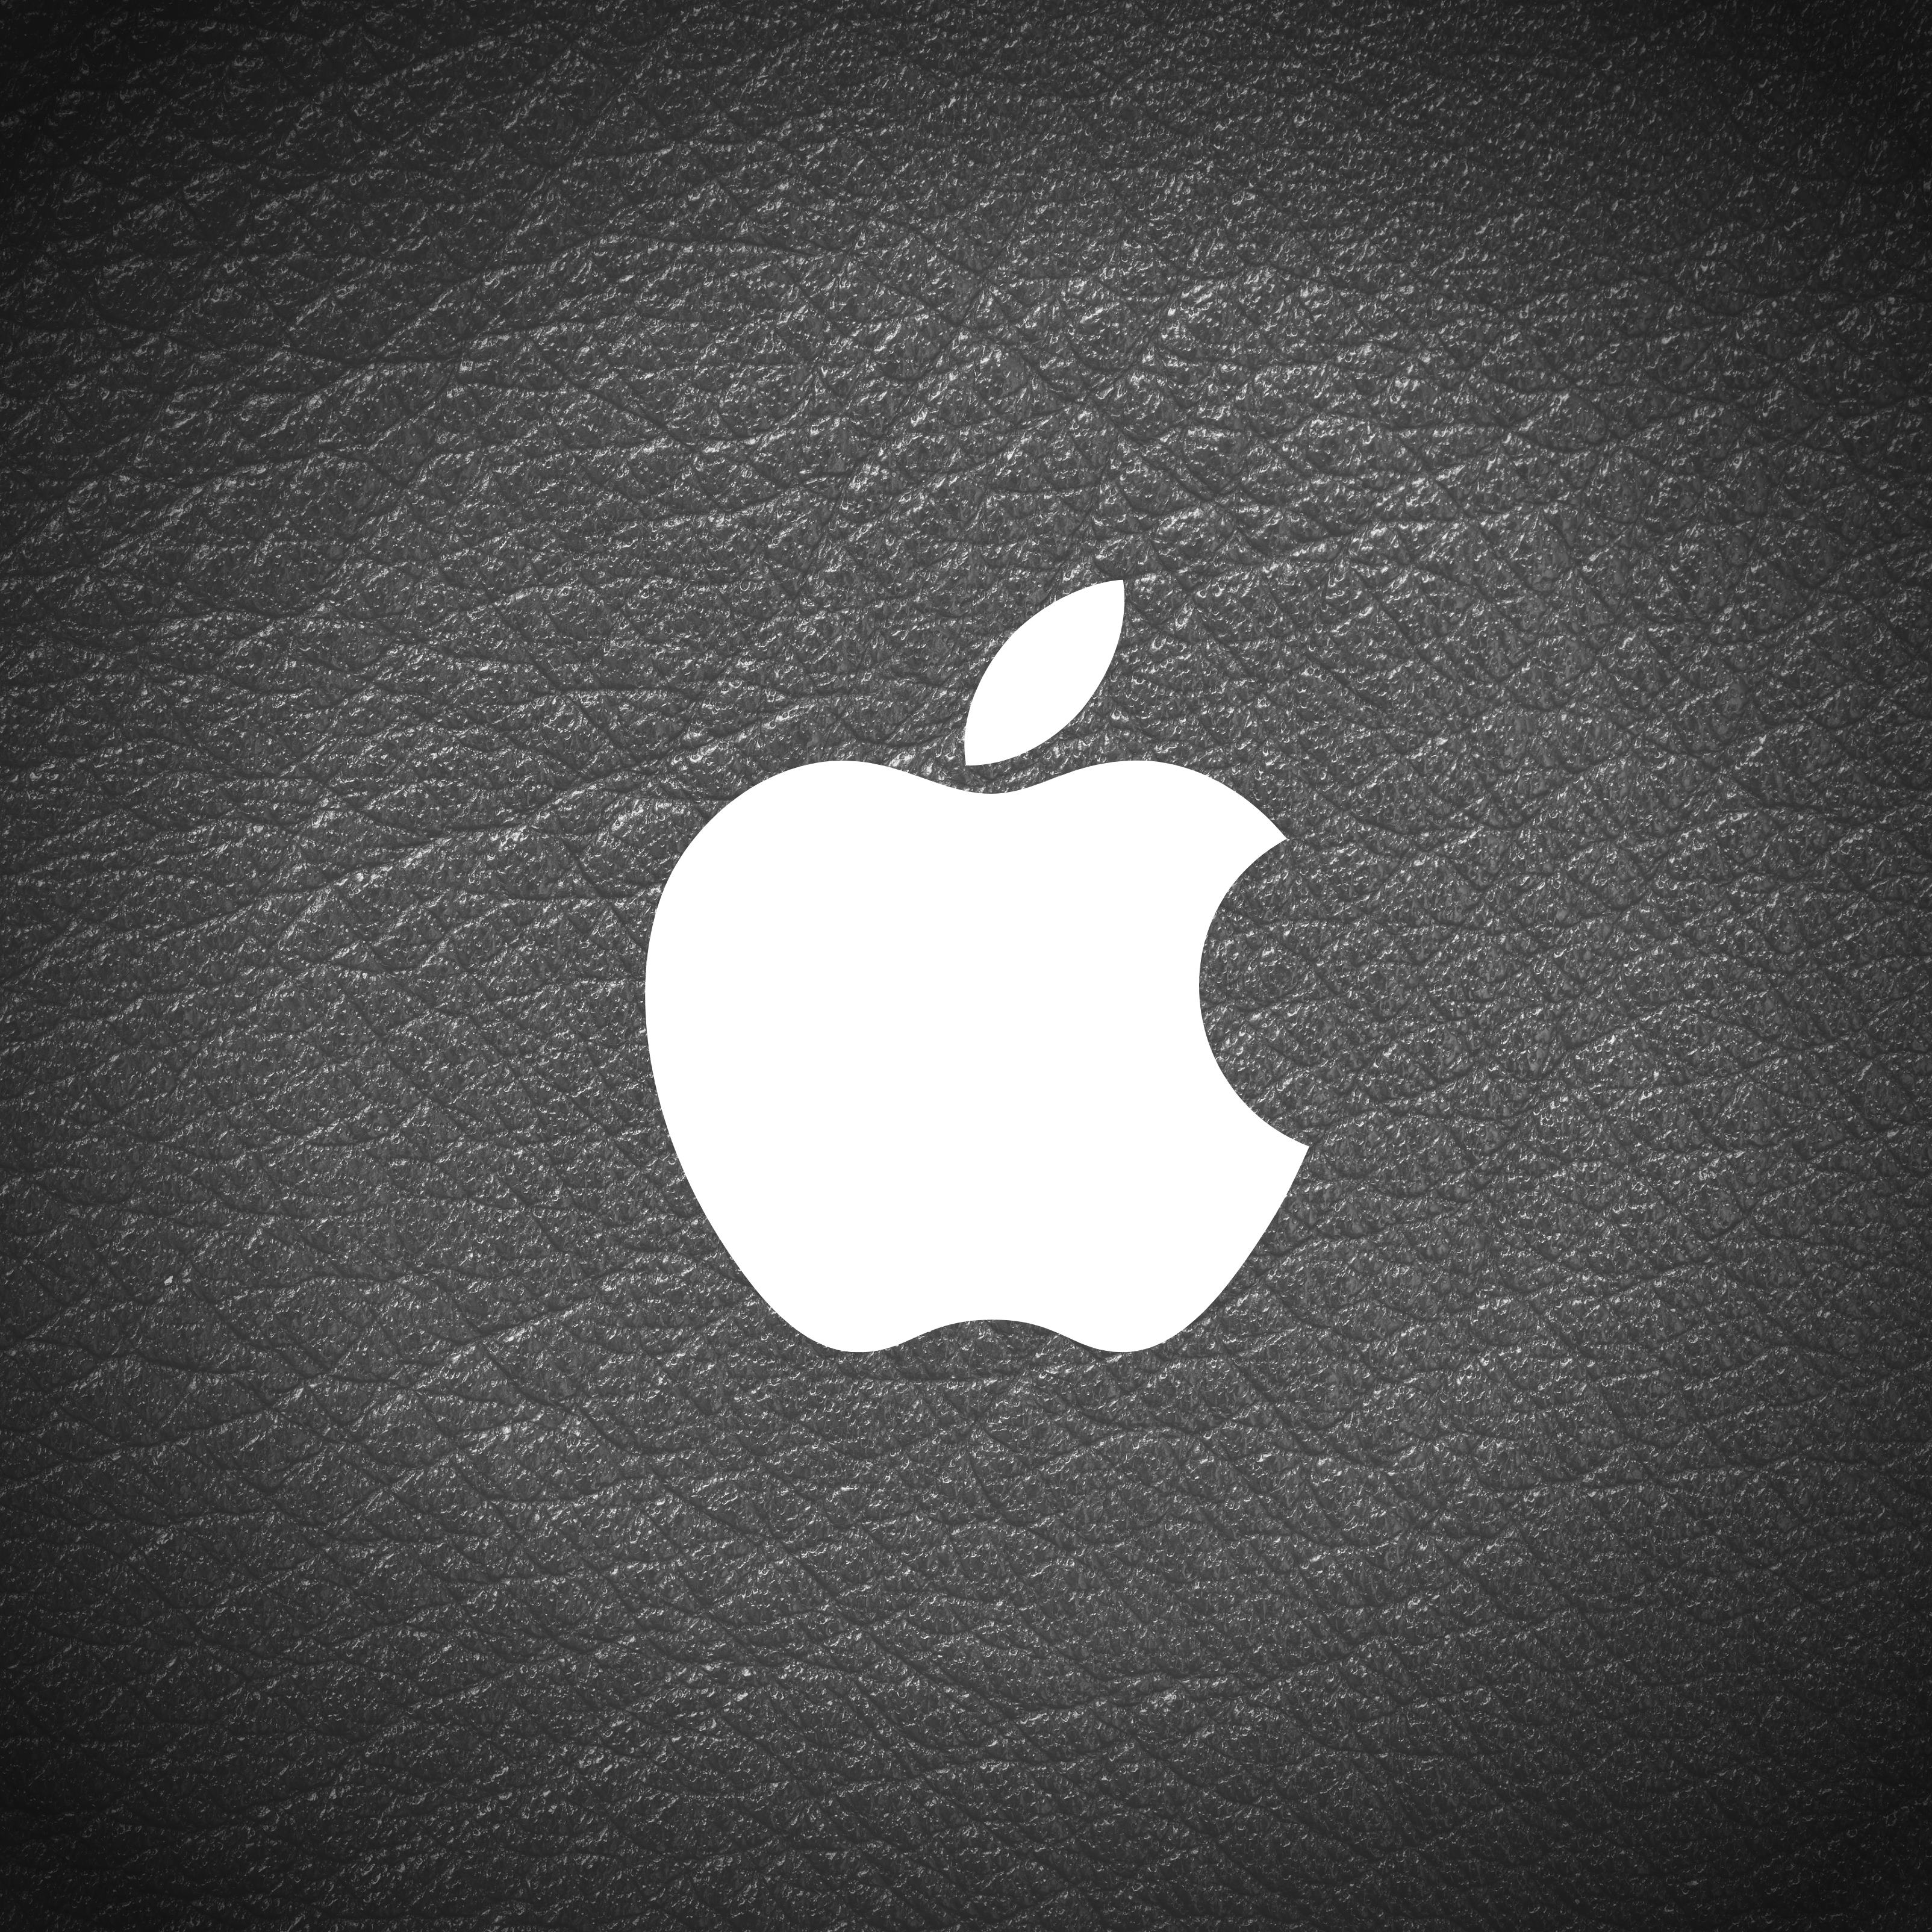 iPad Mini 4 wallpapers Apple Logo Leather Black and White iPad Wallpaper